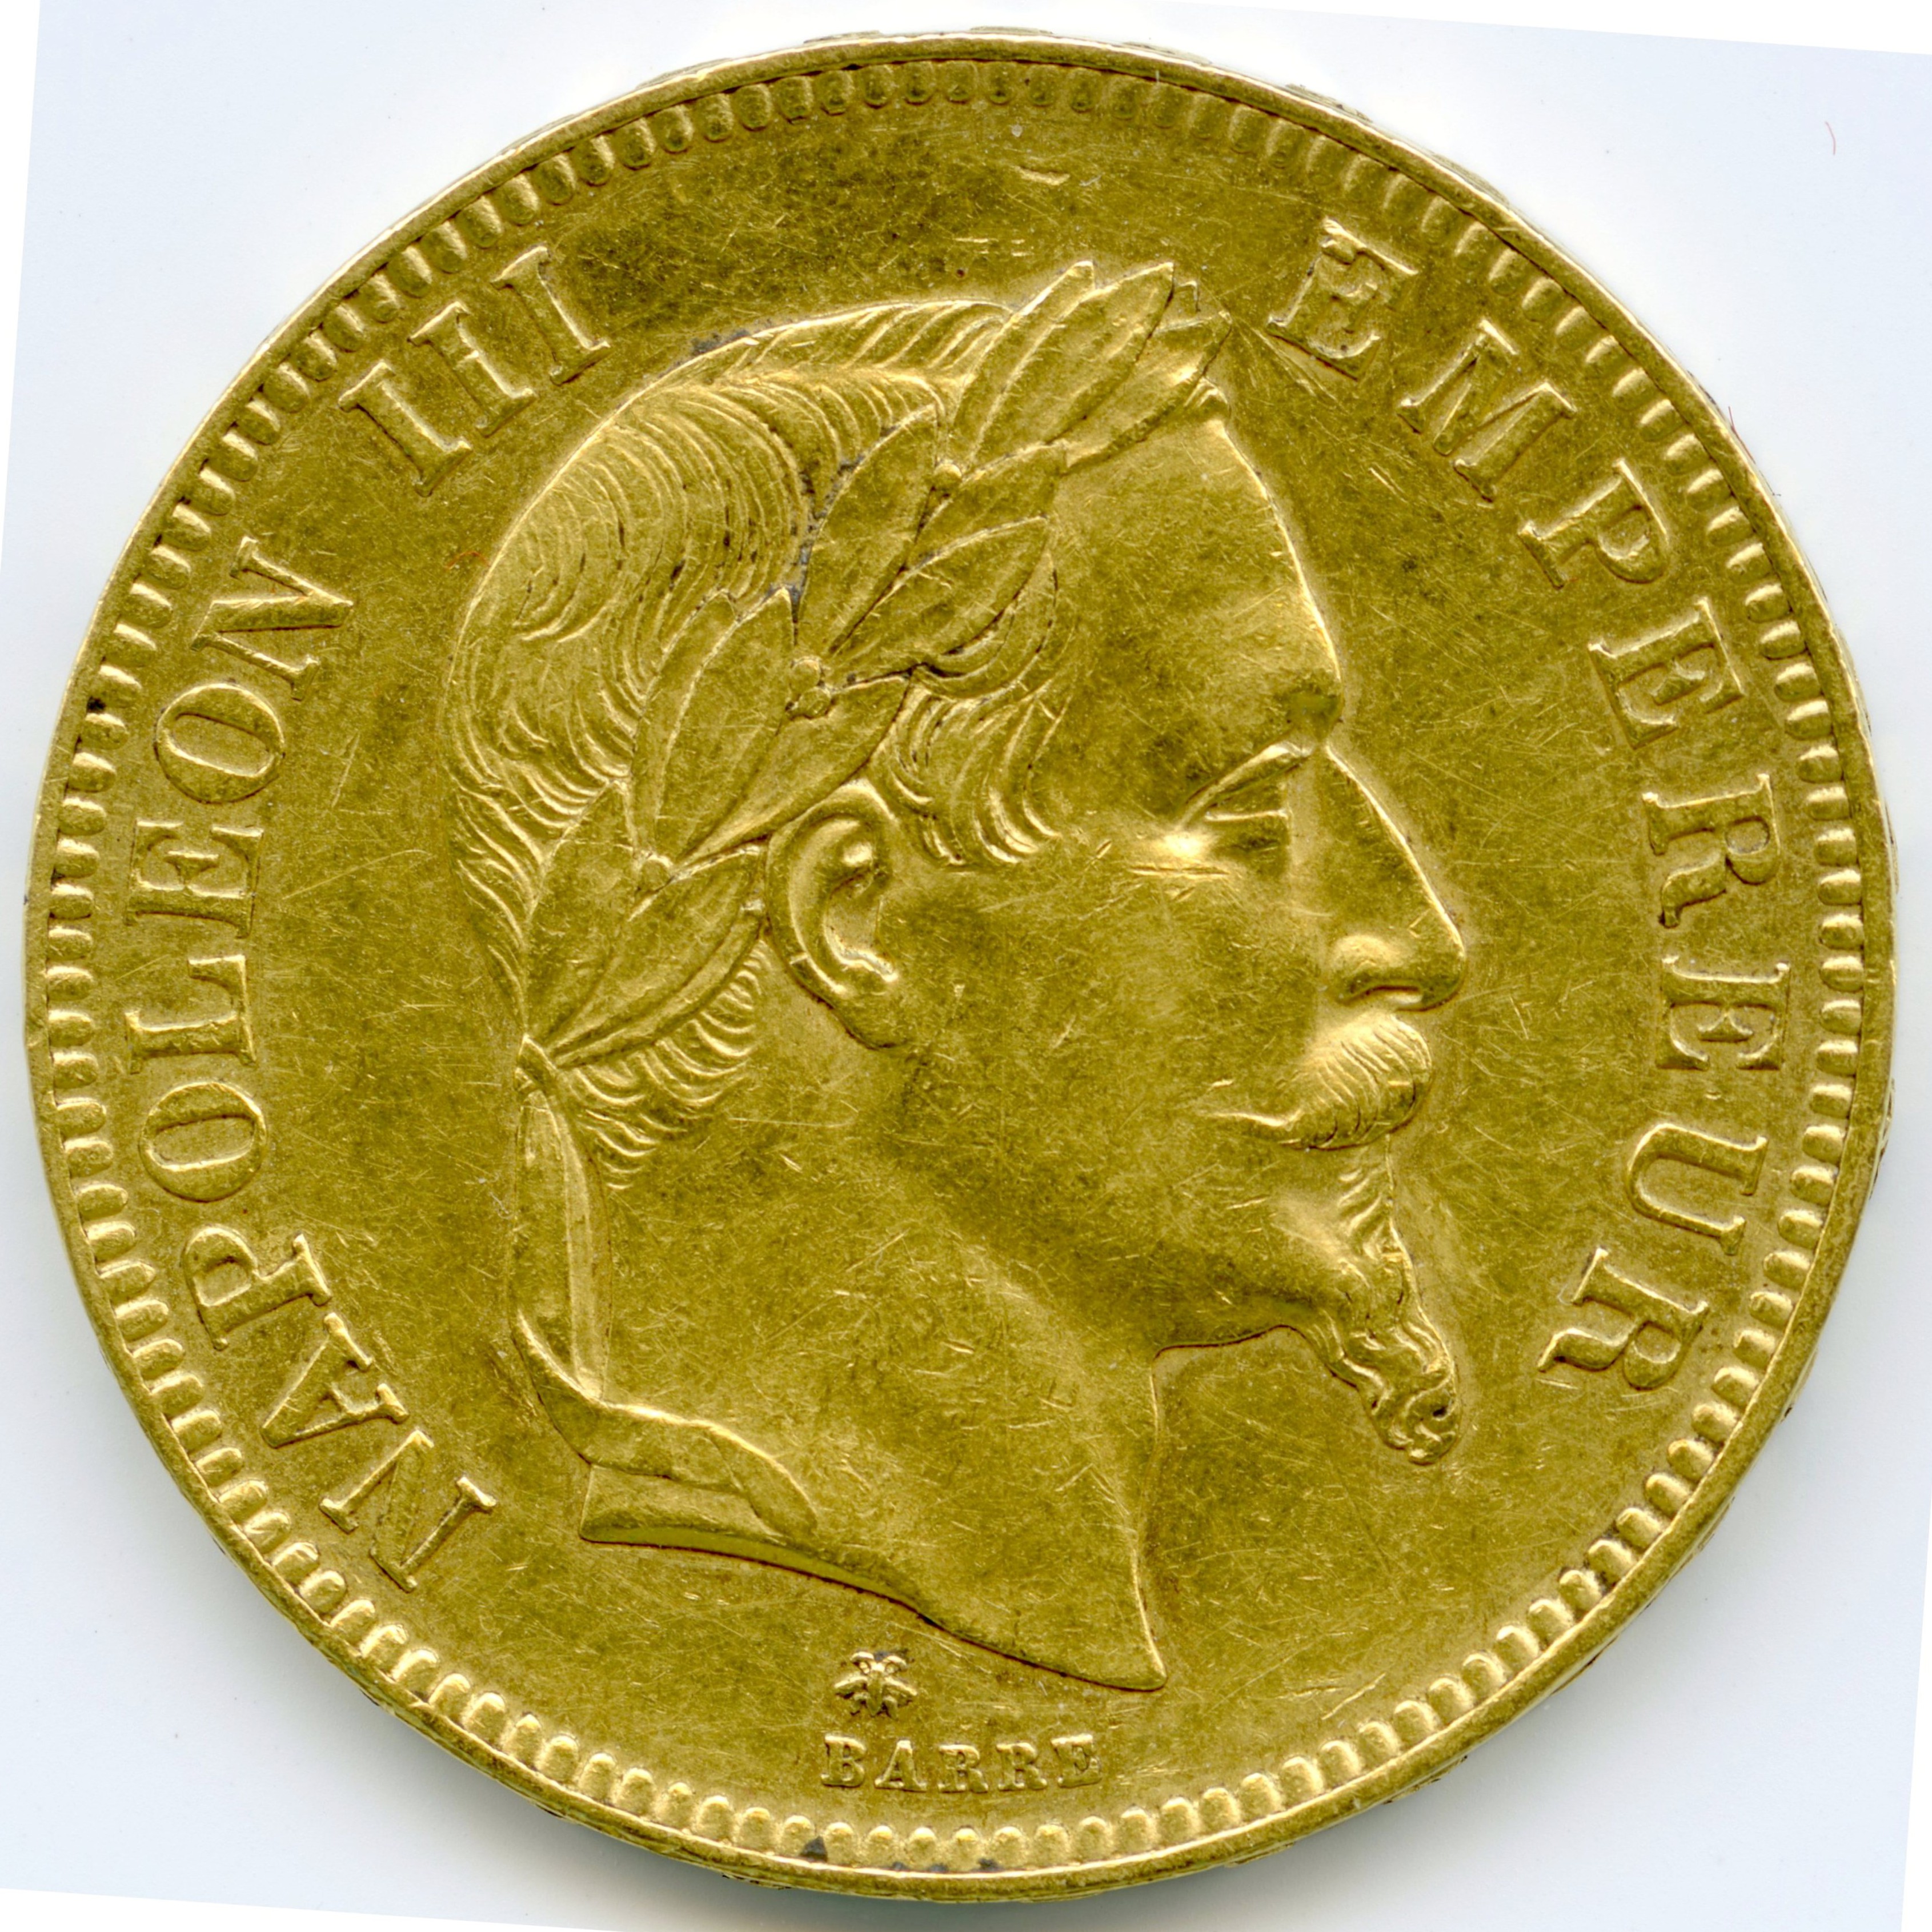 100 Francs - Napoléon III - 1869 - Paris avers